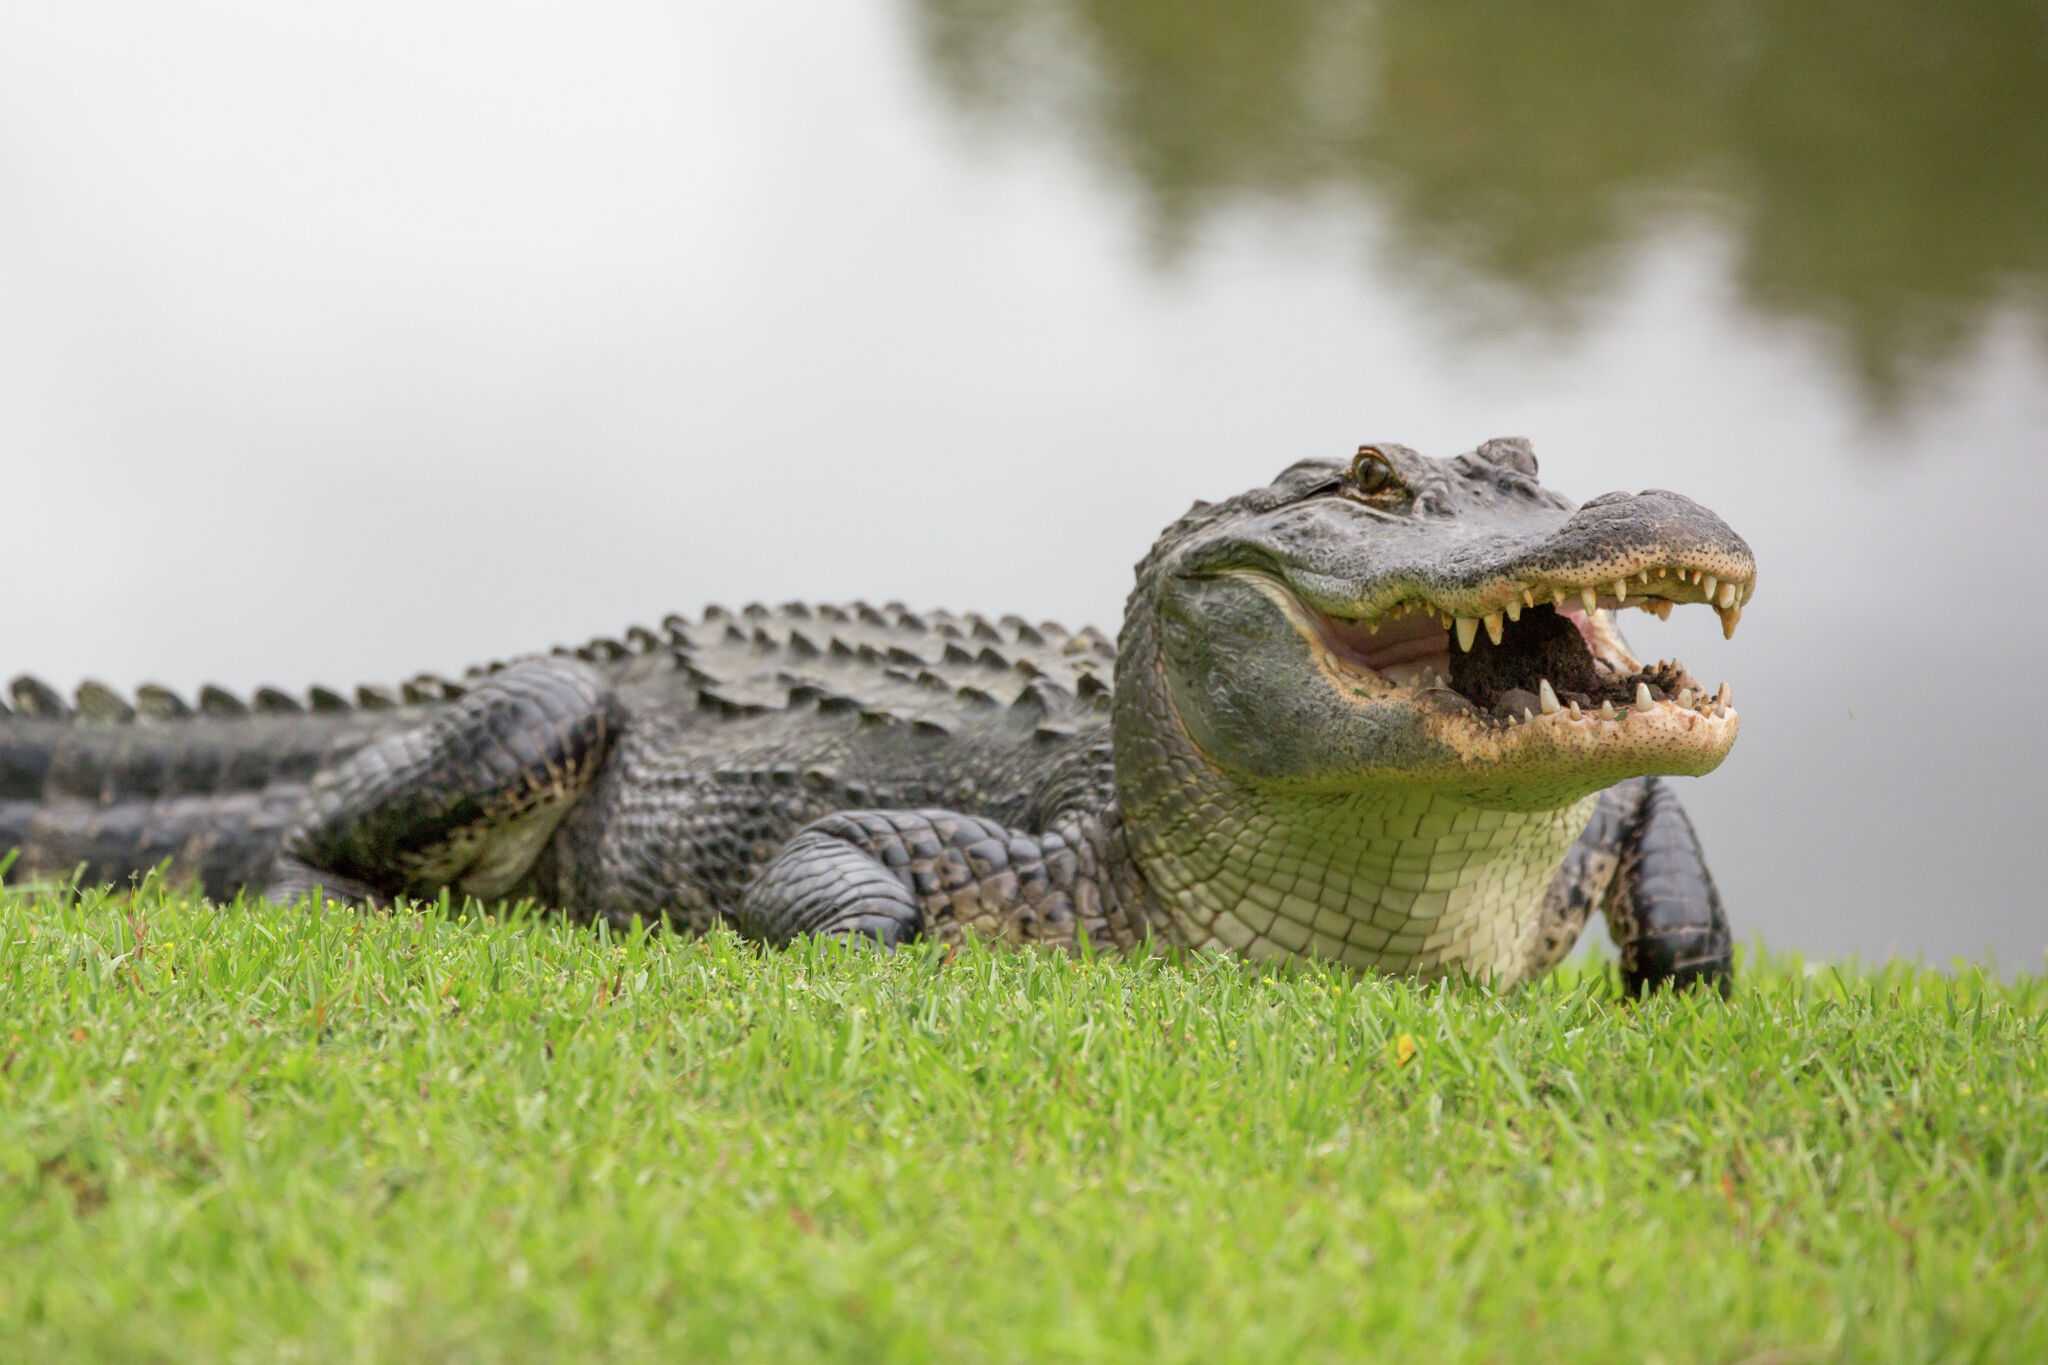 Victory! California Bans Alligator and Crocodile Skin